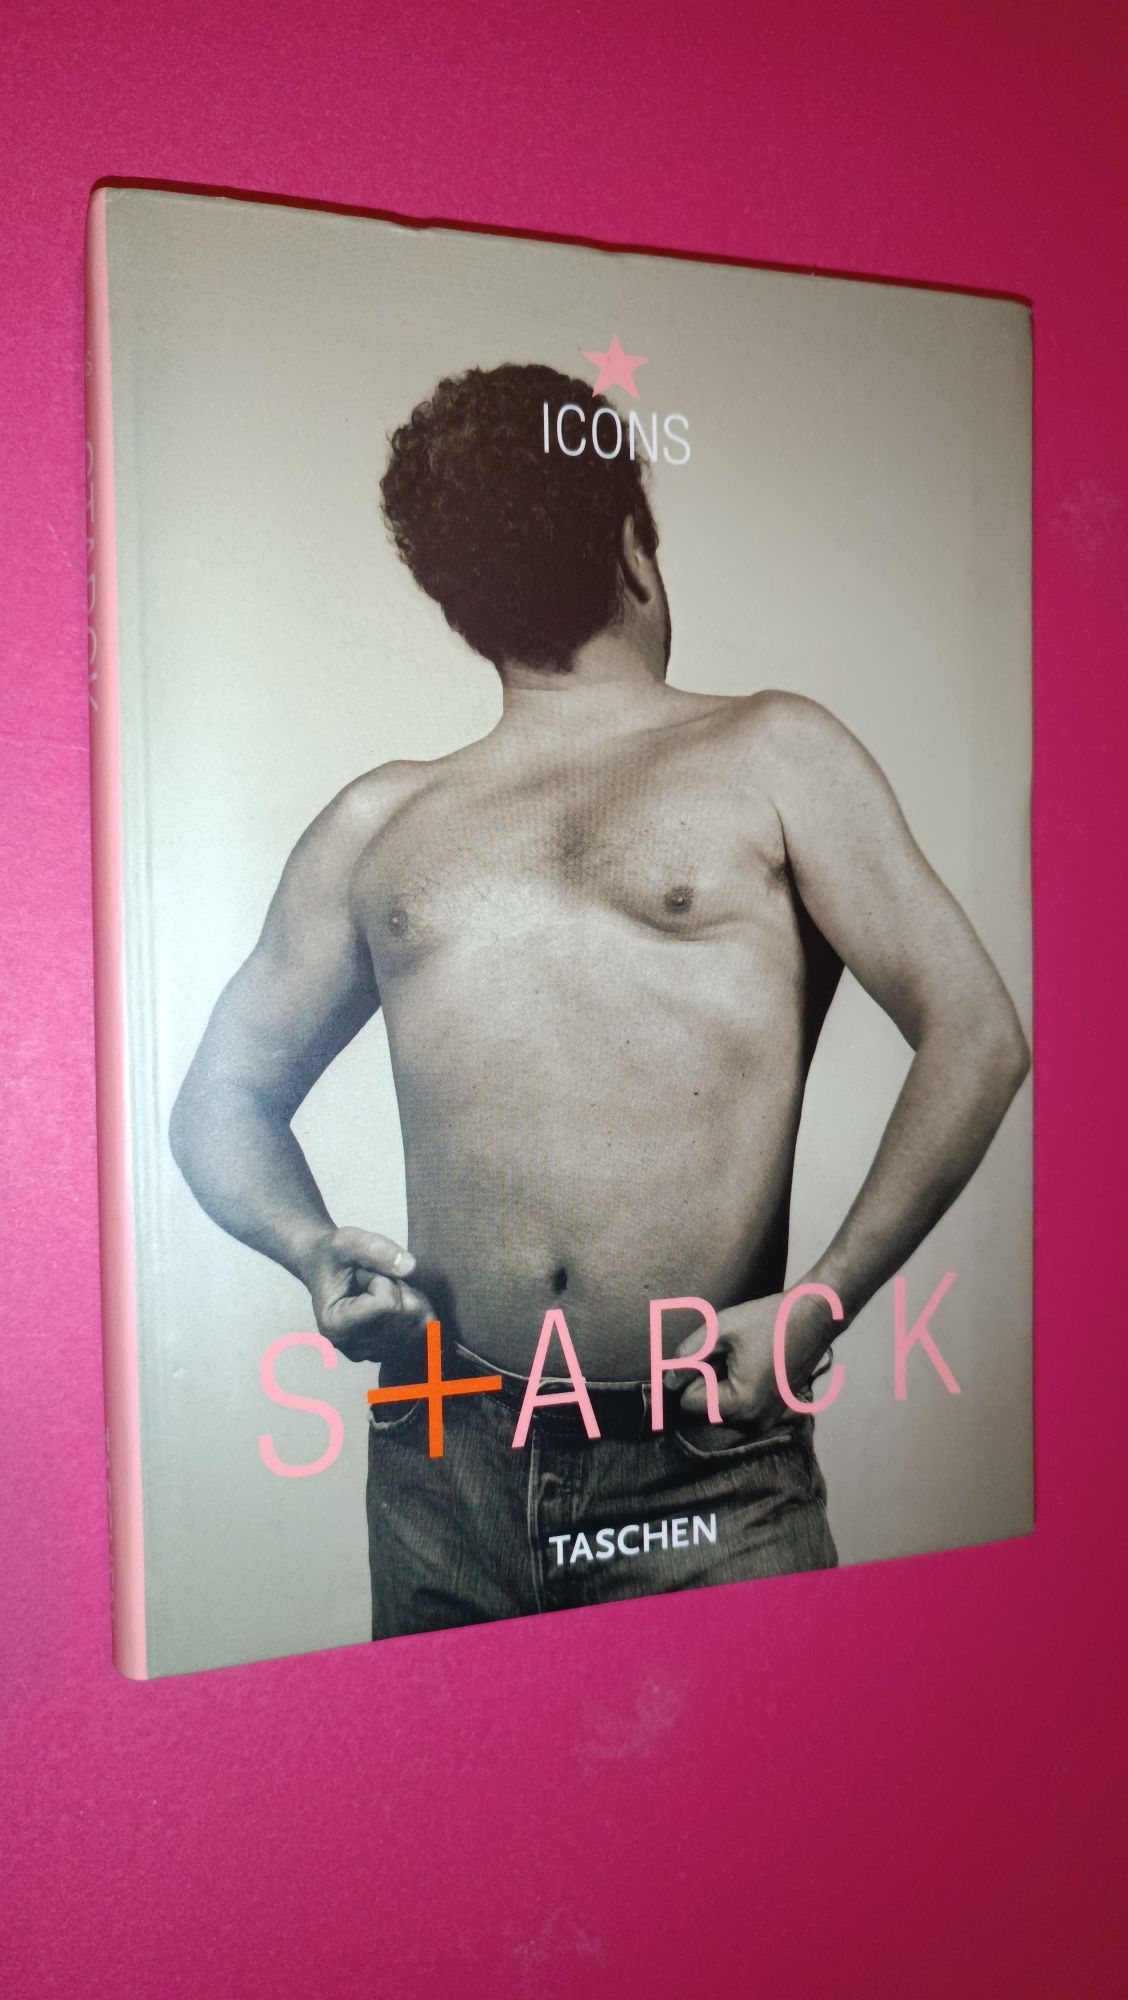 Livro Ícons Taschen S+arck [Starck] 1 edição 2004